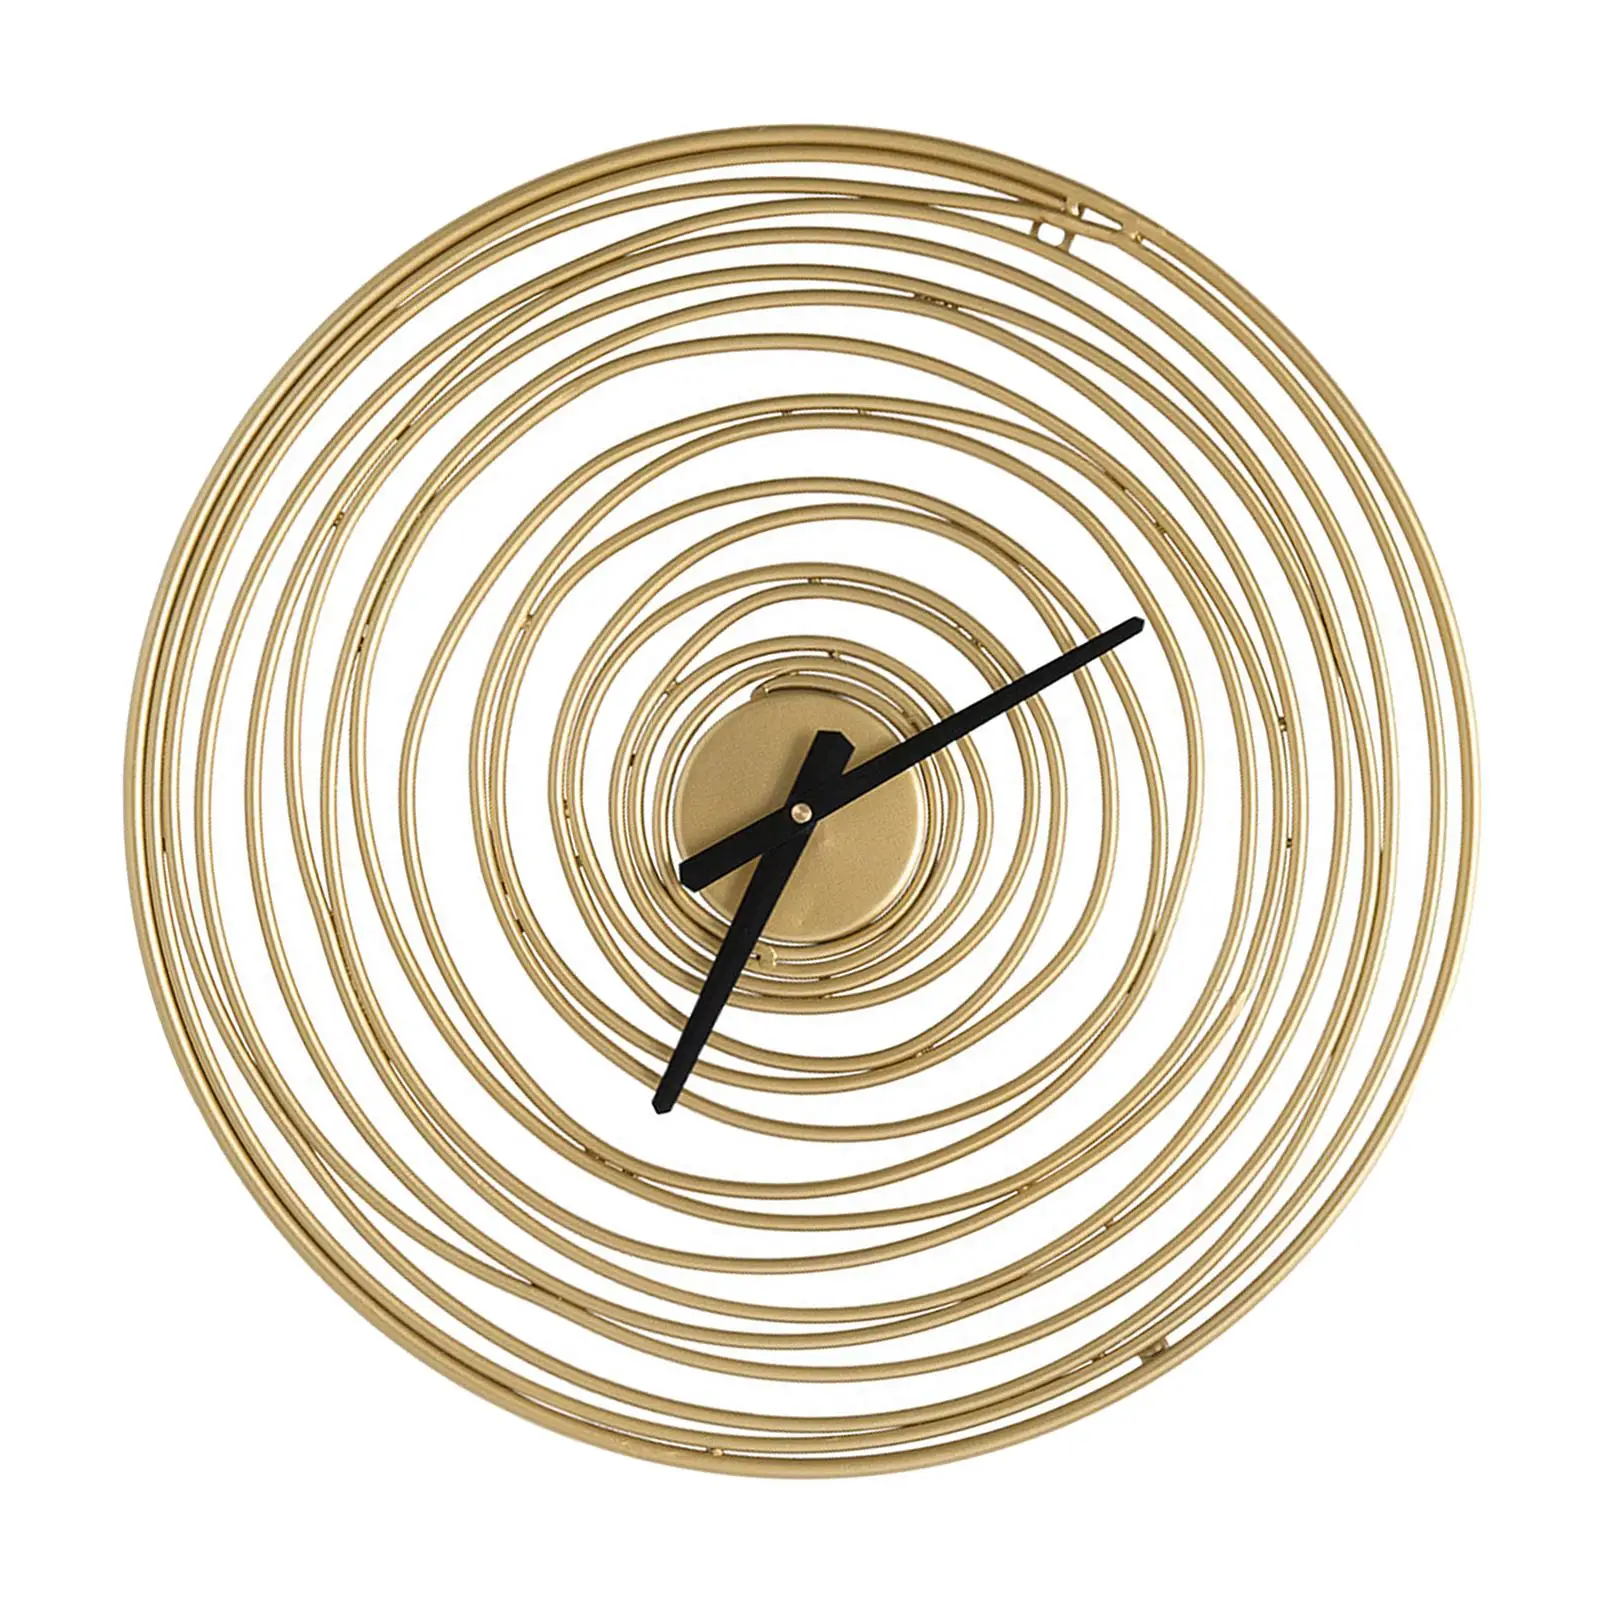 Metal Wall Clock Decorative Non Ticking Office Wood Grain Fashion